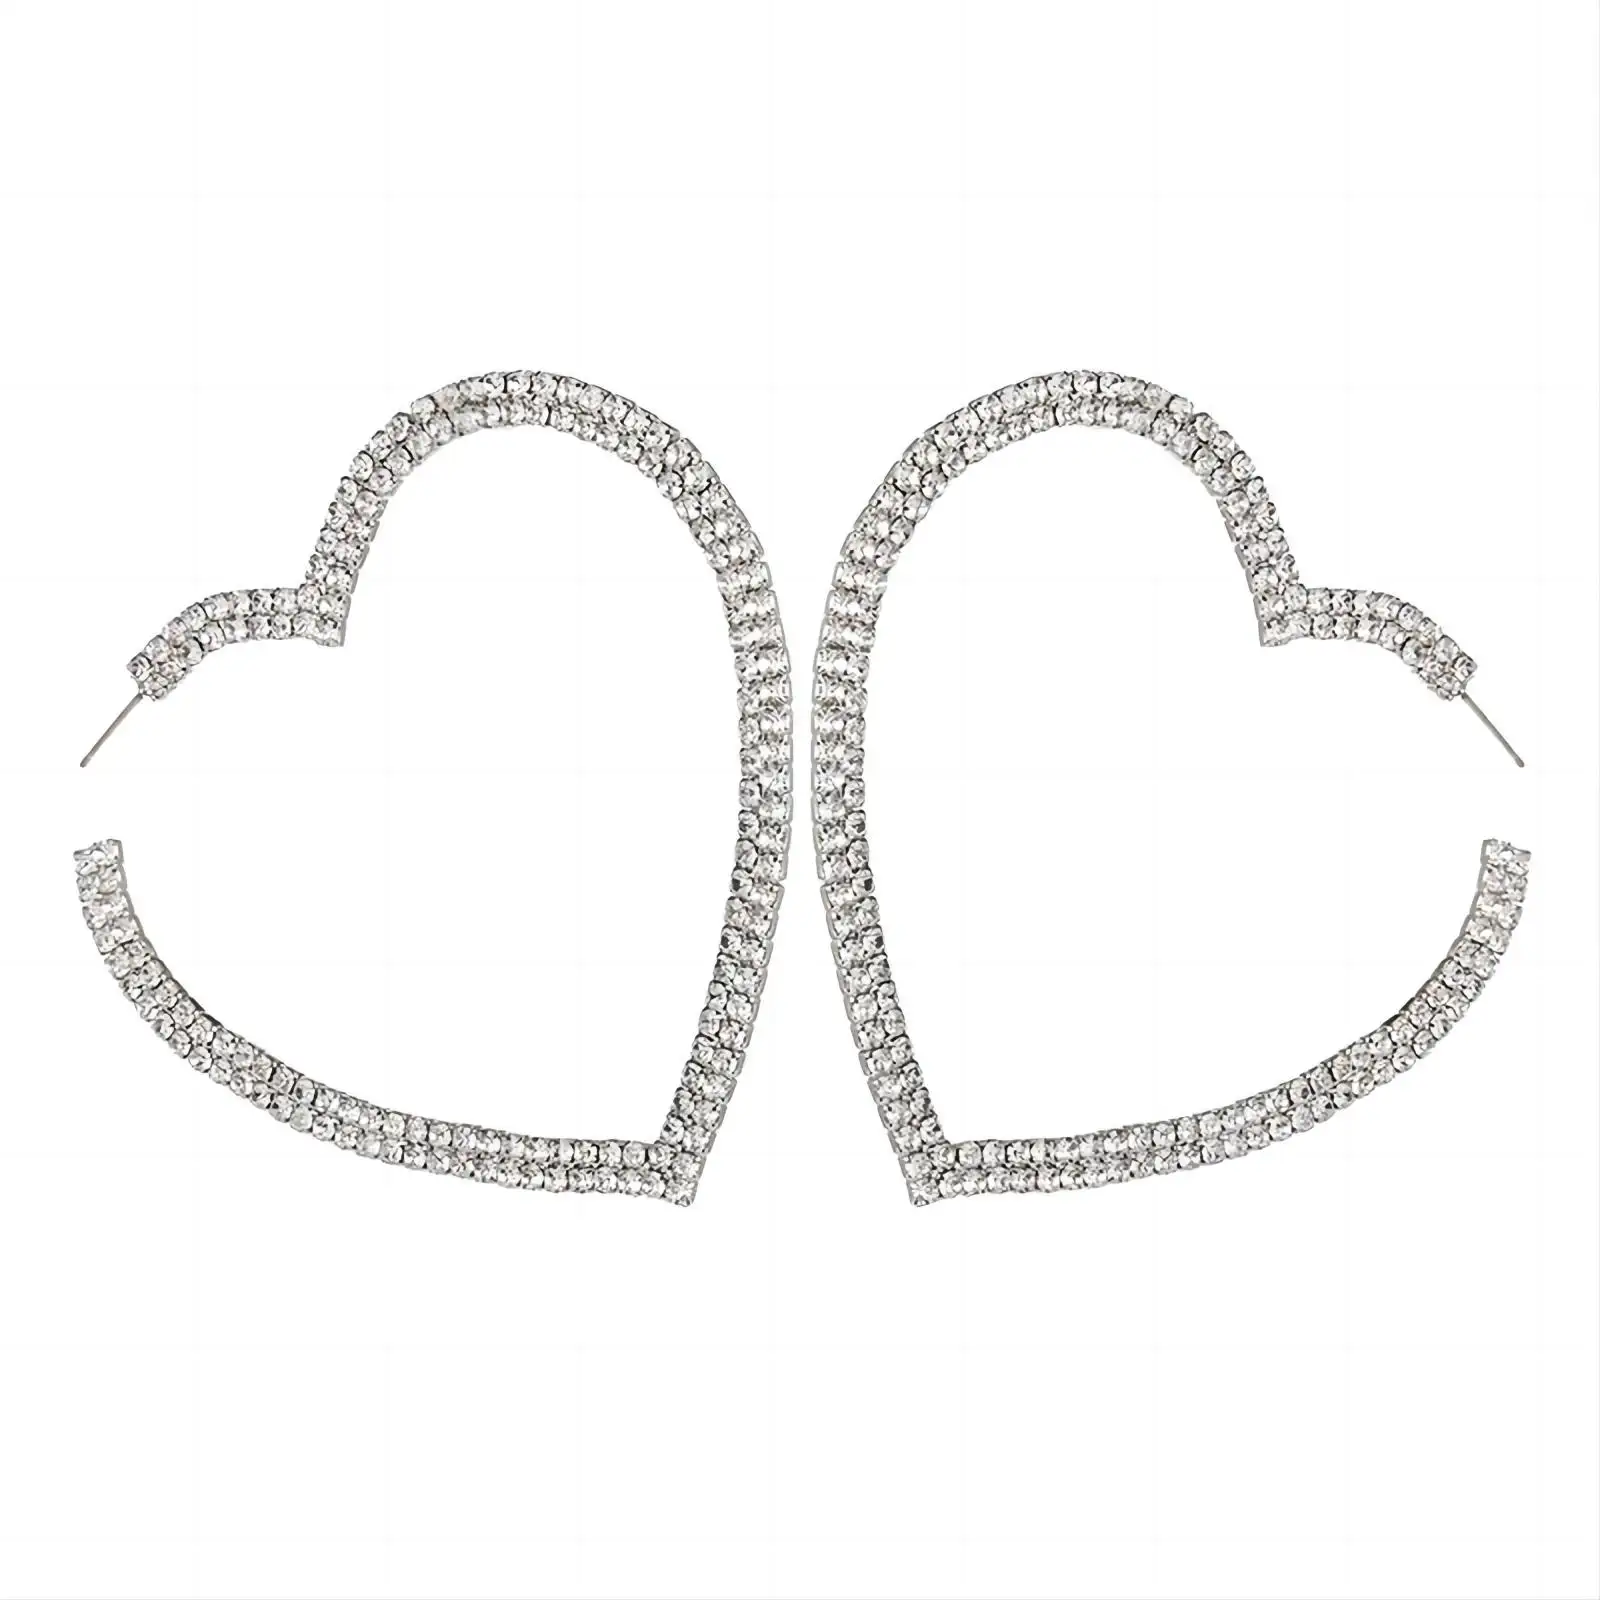 New 925 Sterling Silver Needle Heart Statement Earrings 18K Gold Plated Large Rhinestone Crystal Love Heart Earrings Jewelry